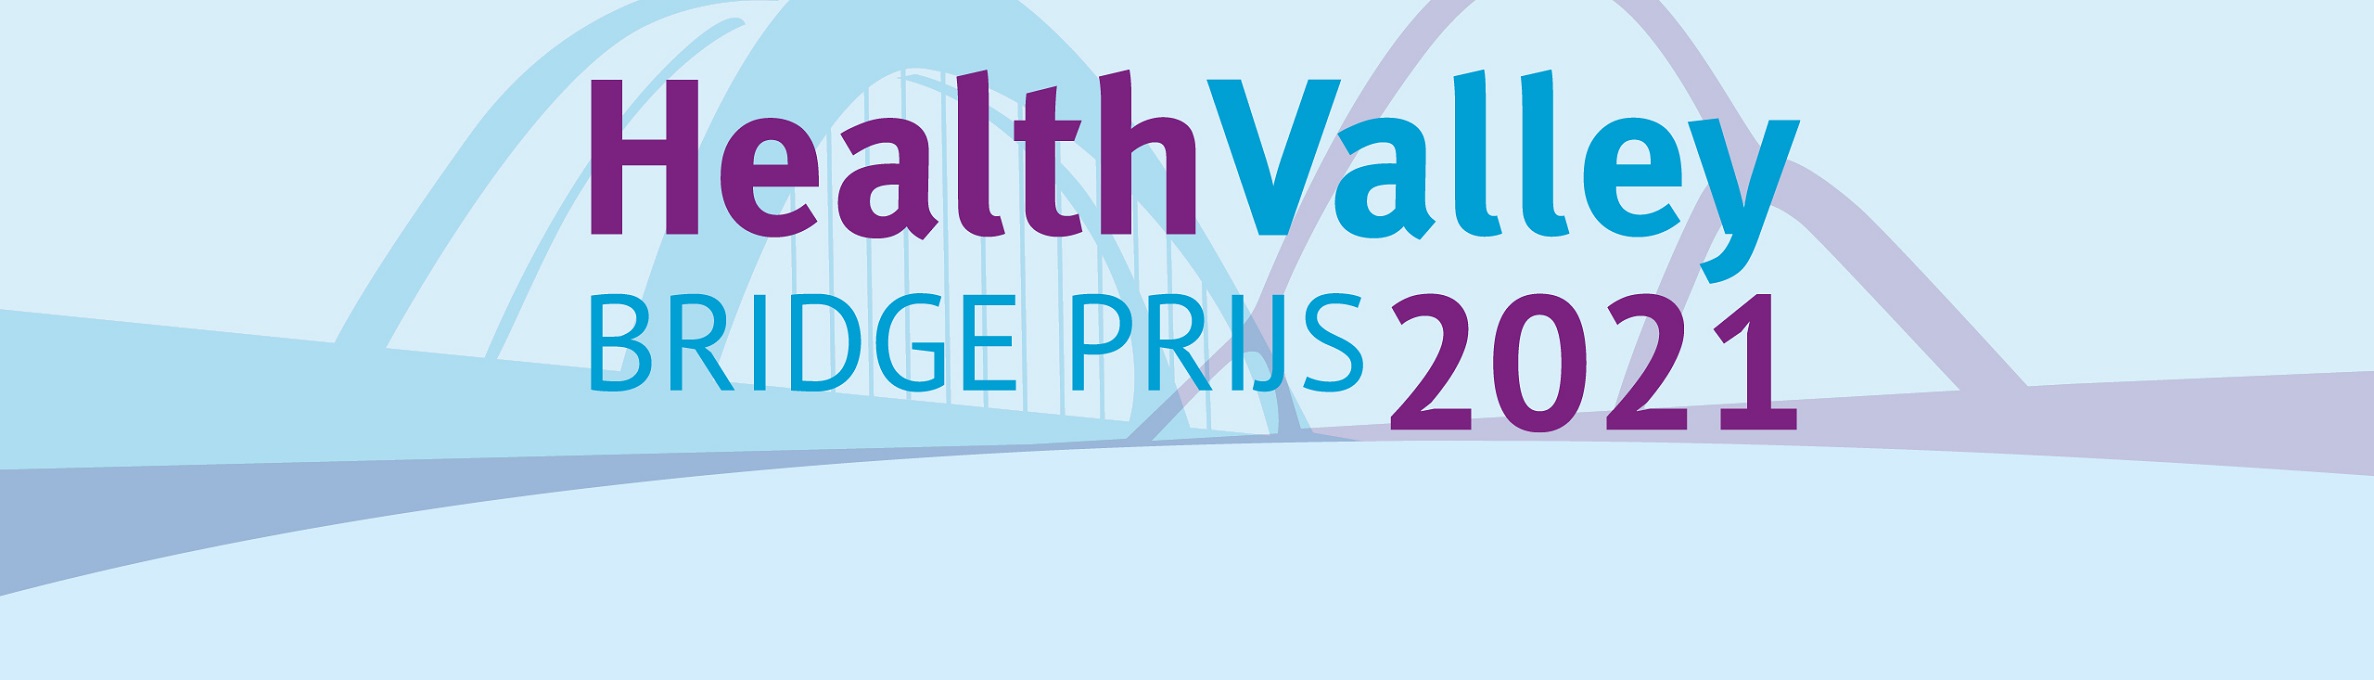 logo health valley bridge prijs 2021